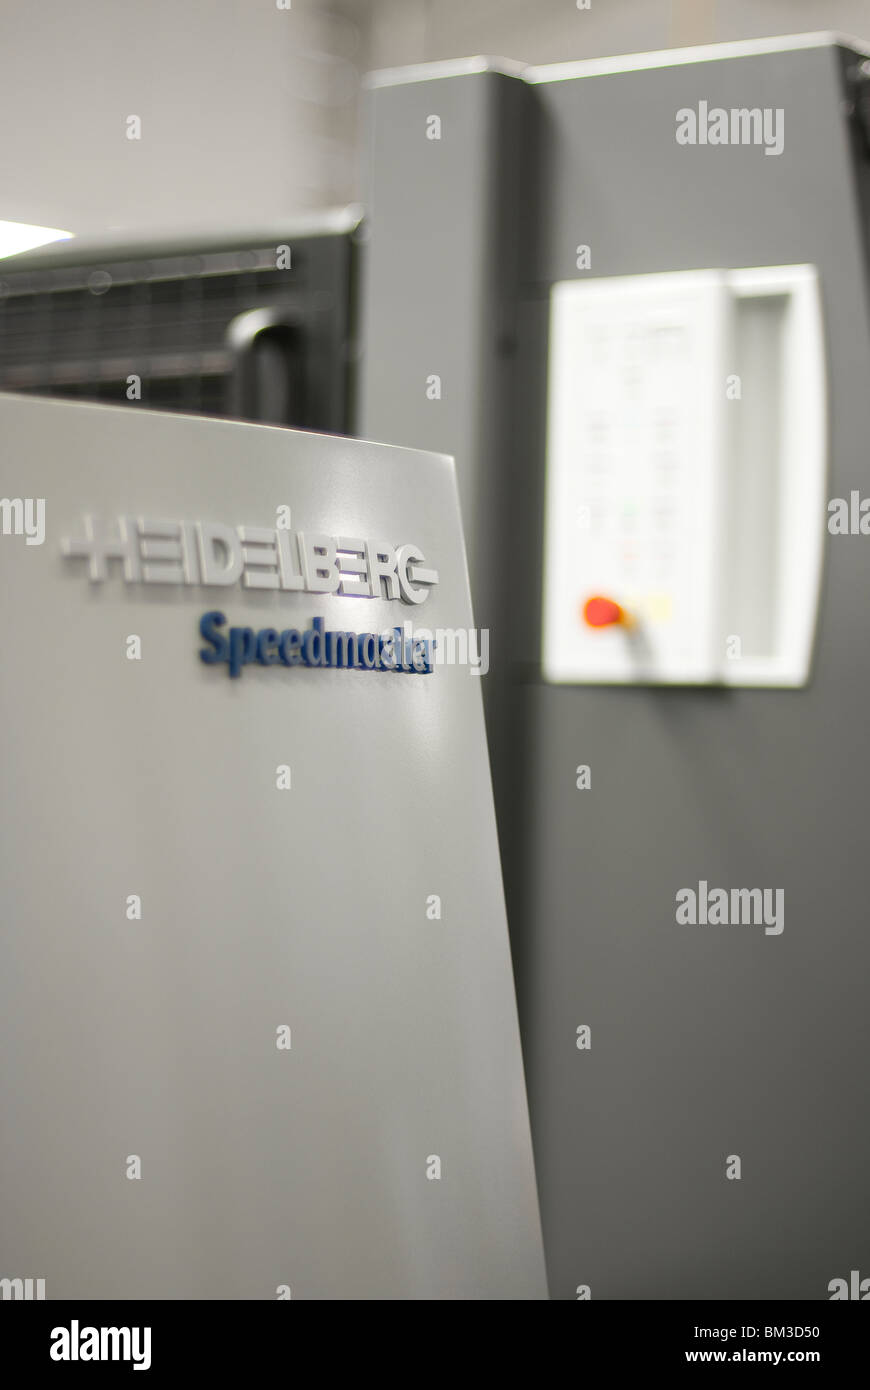 Heidelberg speedmaster sheetfed stampa offset Foto Stock